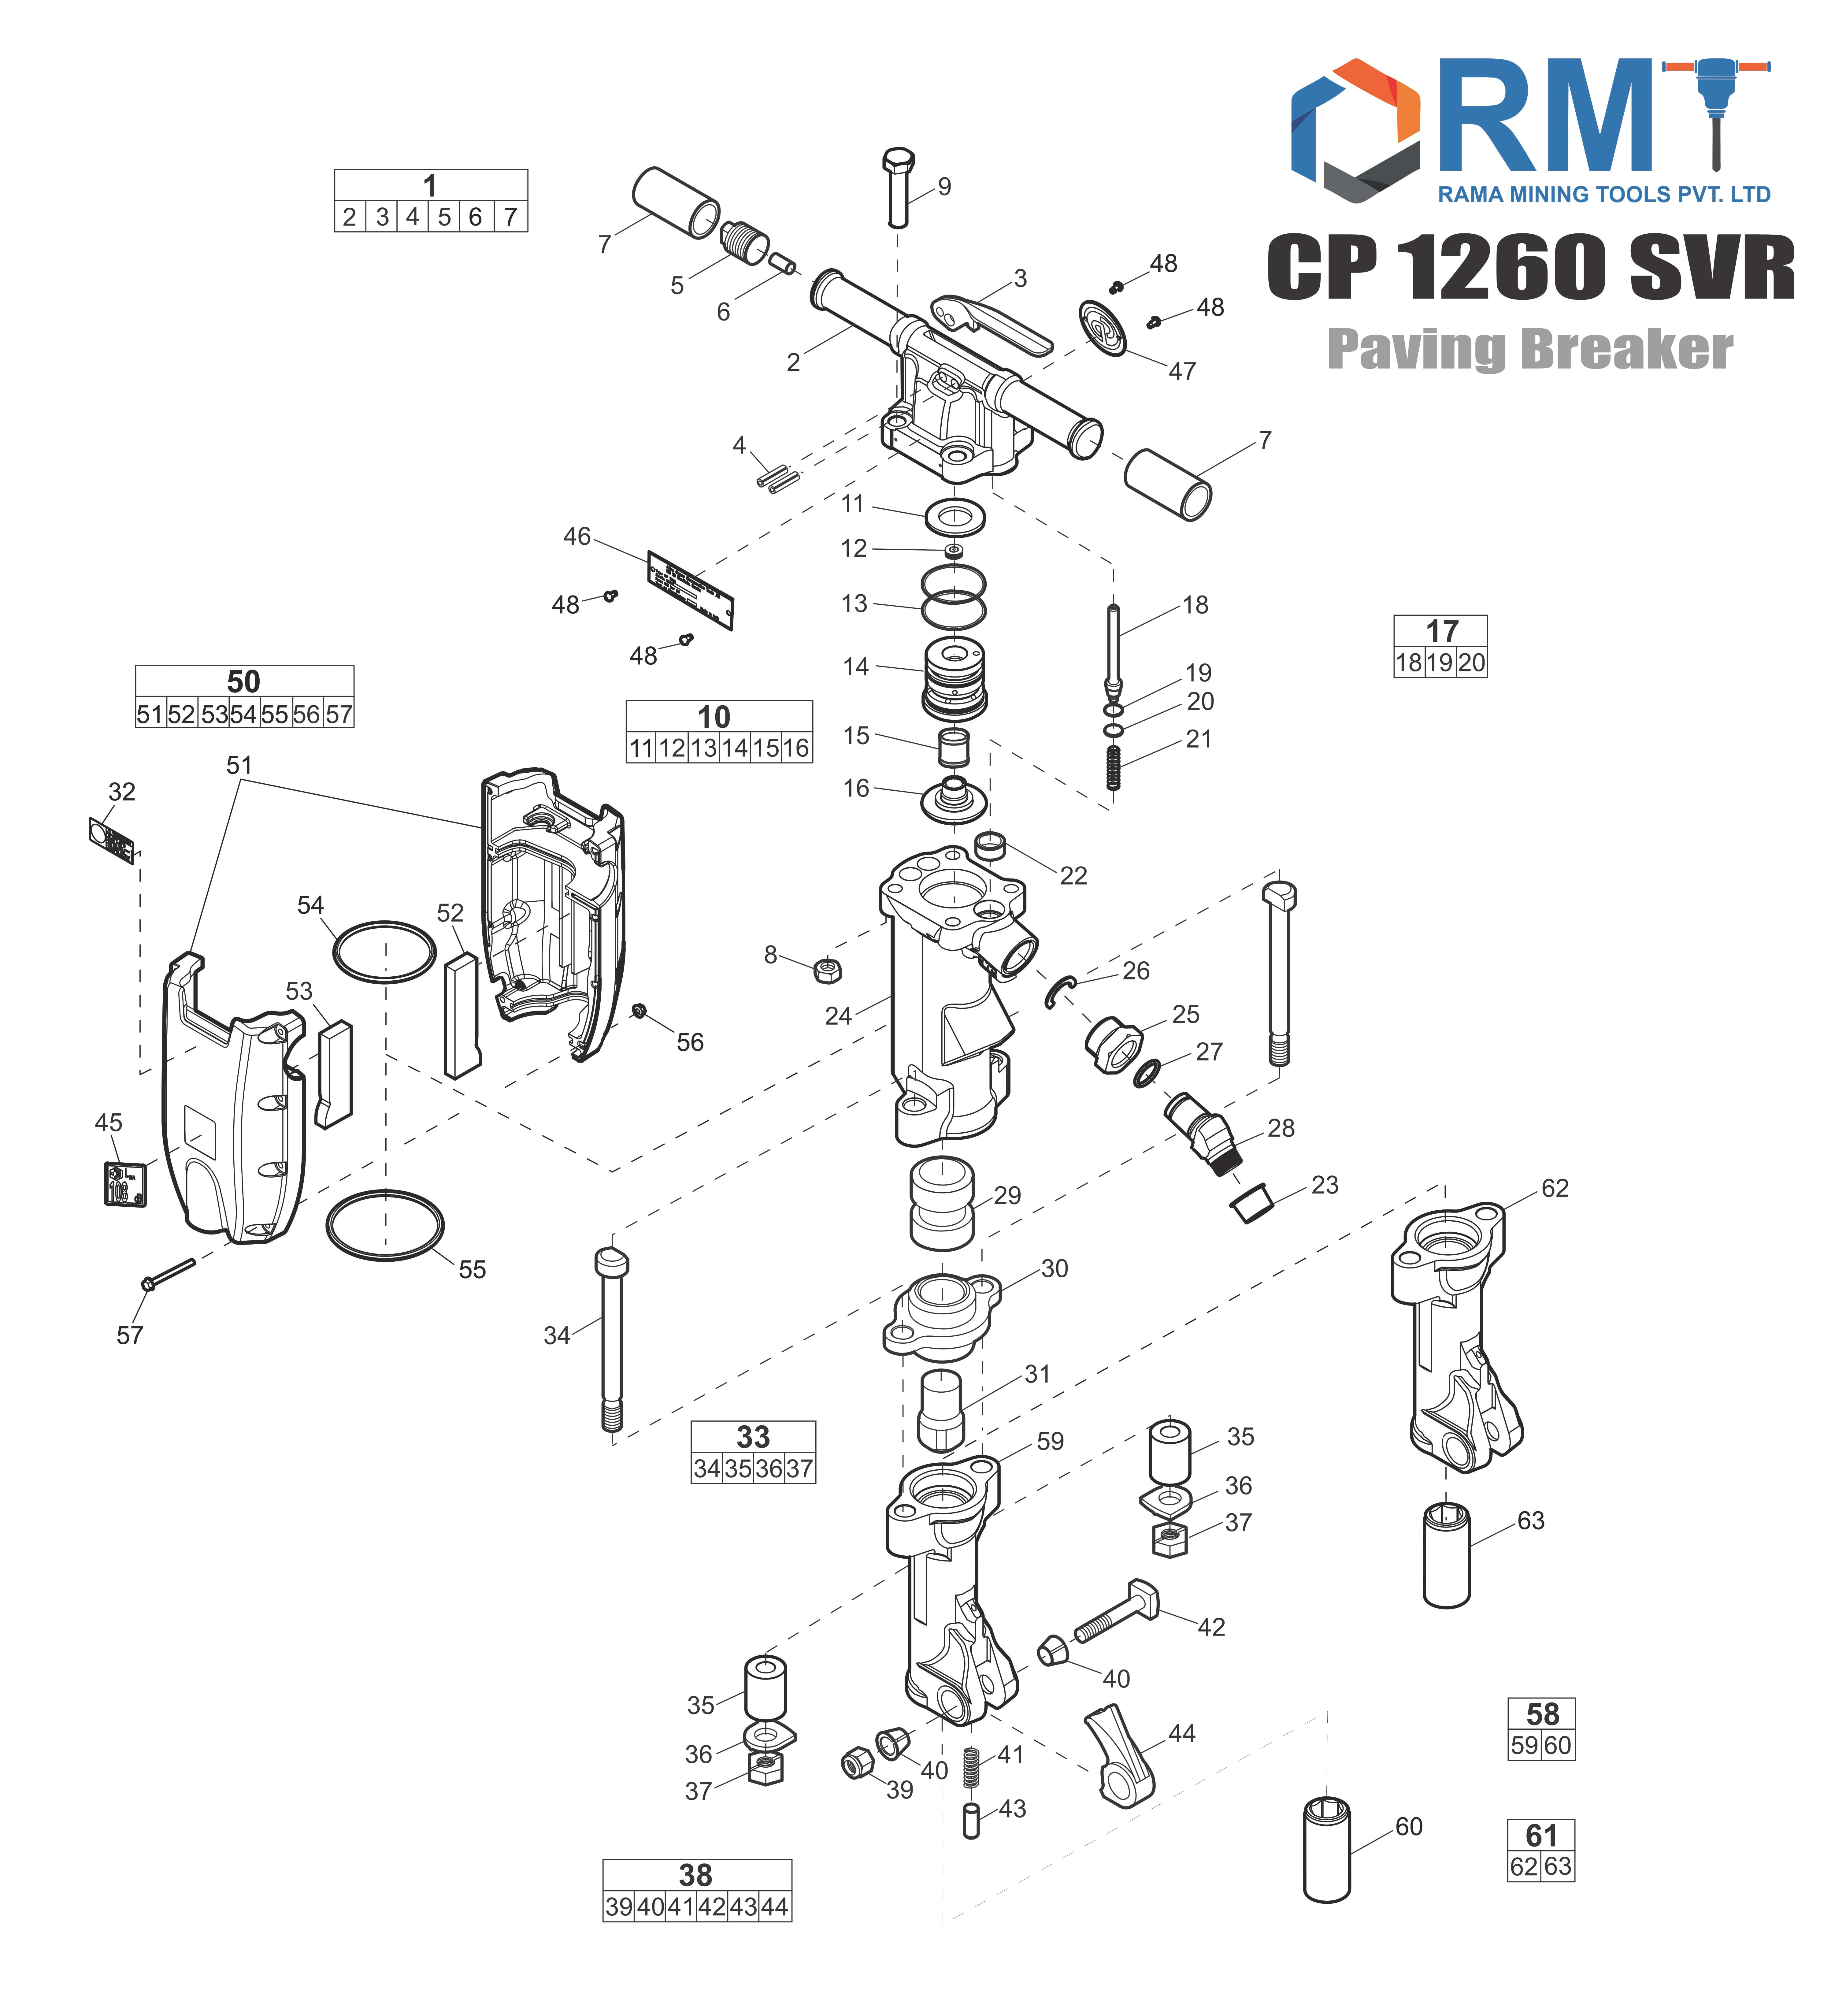 CP 1260 SVR - Pneumatic Breaker